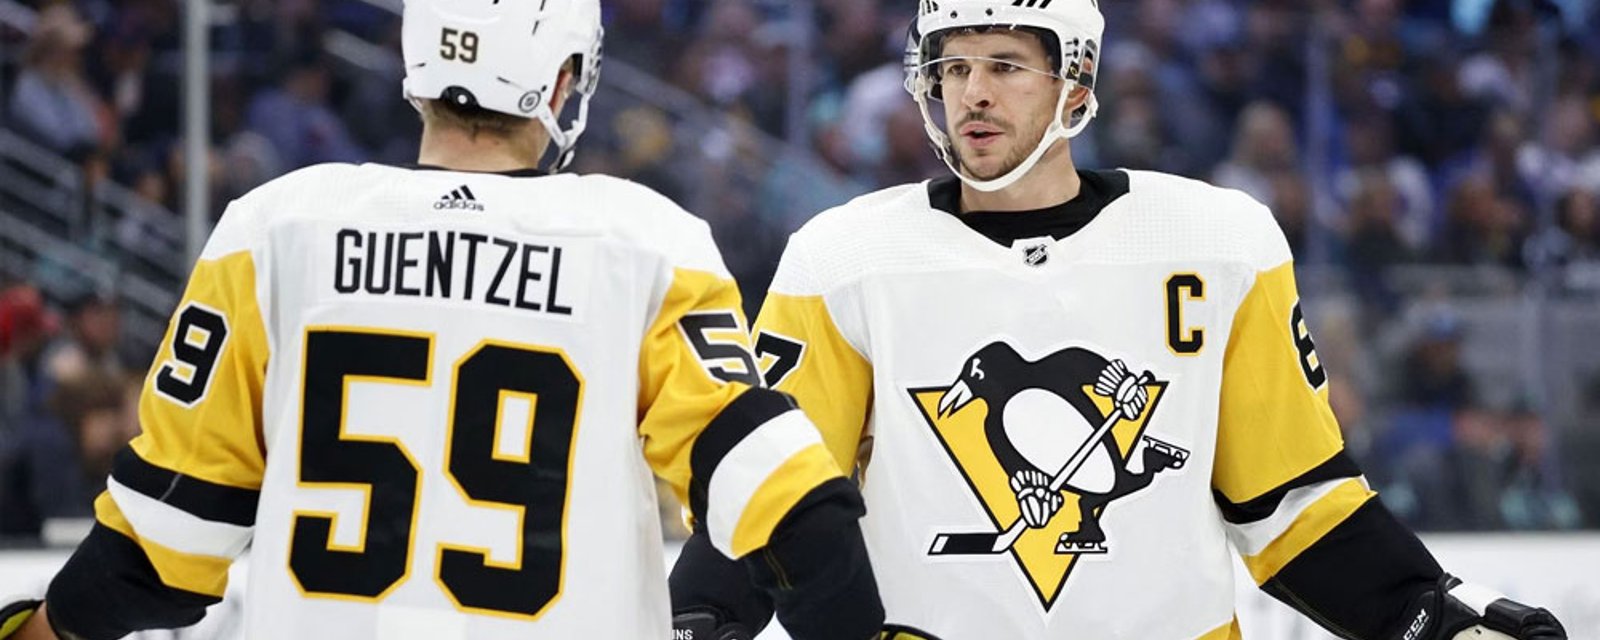 Penguins trade Guentzel in blockbuster six player deal